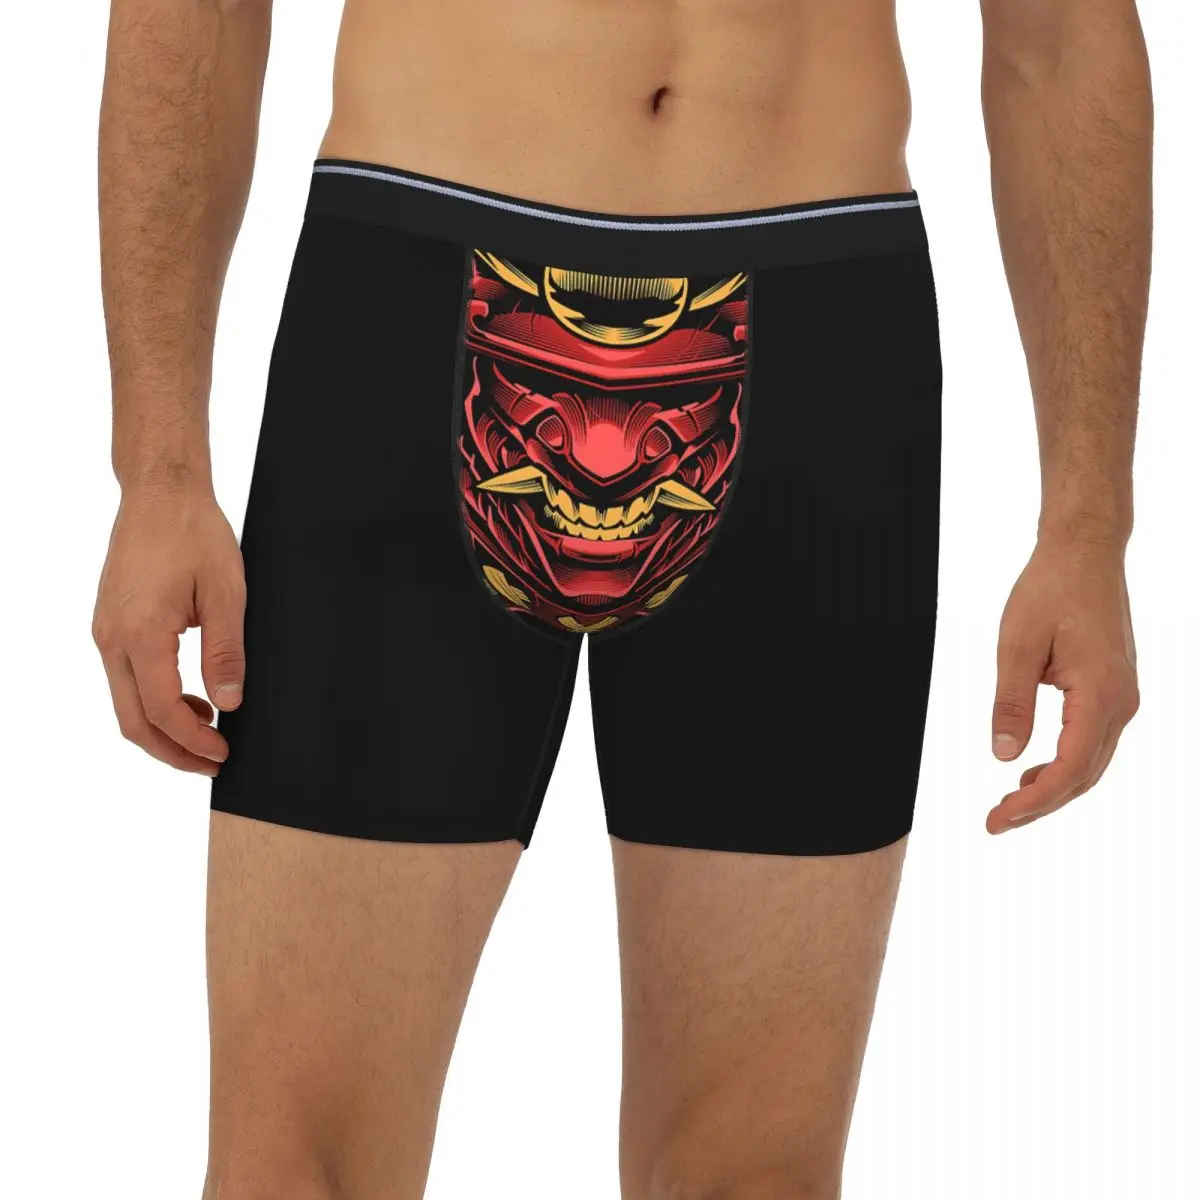 Samurai Helmet Manga Art Underpants Breathbale Panties spoof funny Male Underwear Boxer Briefs extended underwear